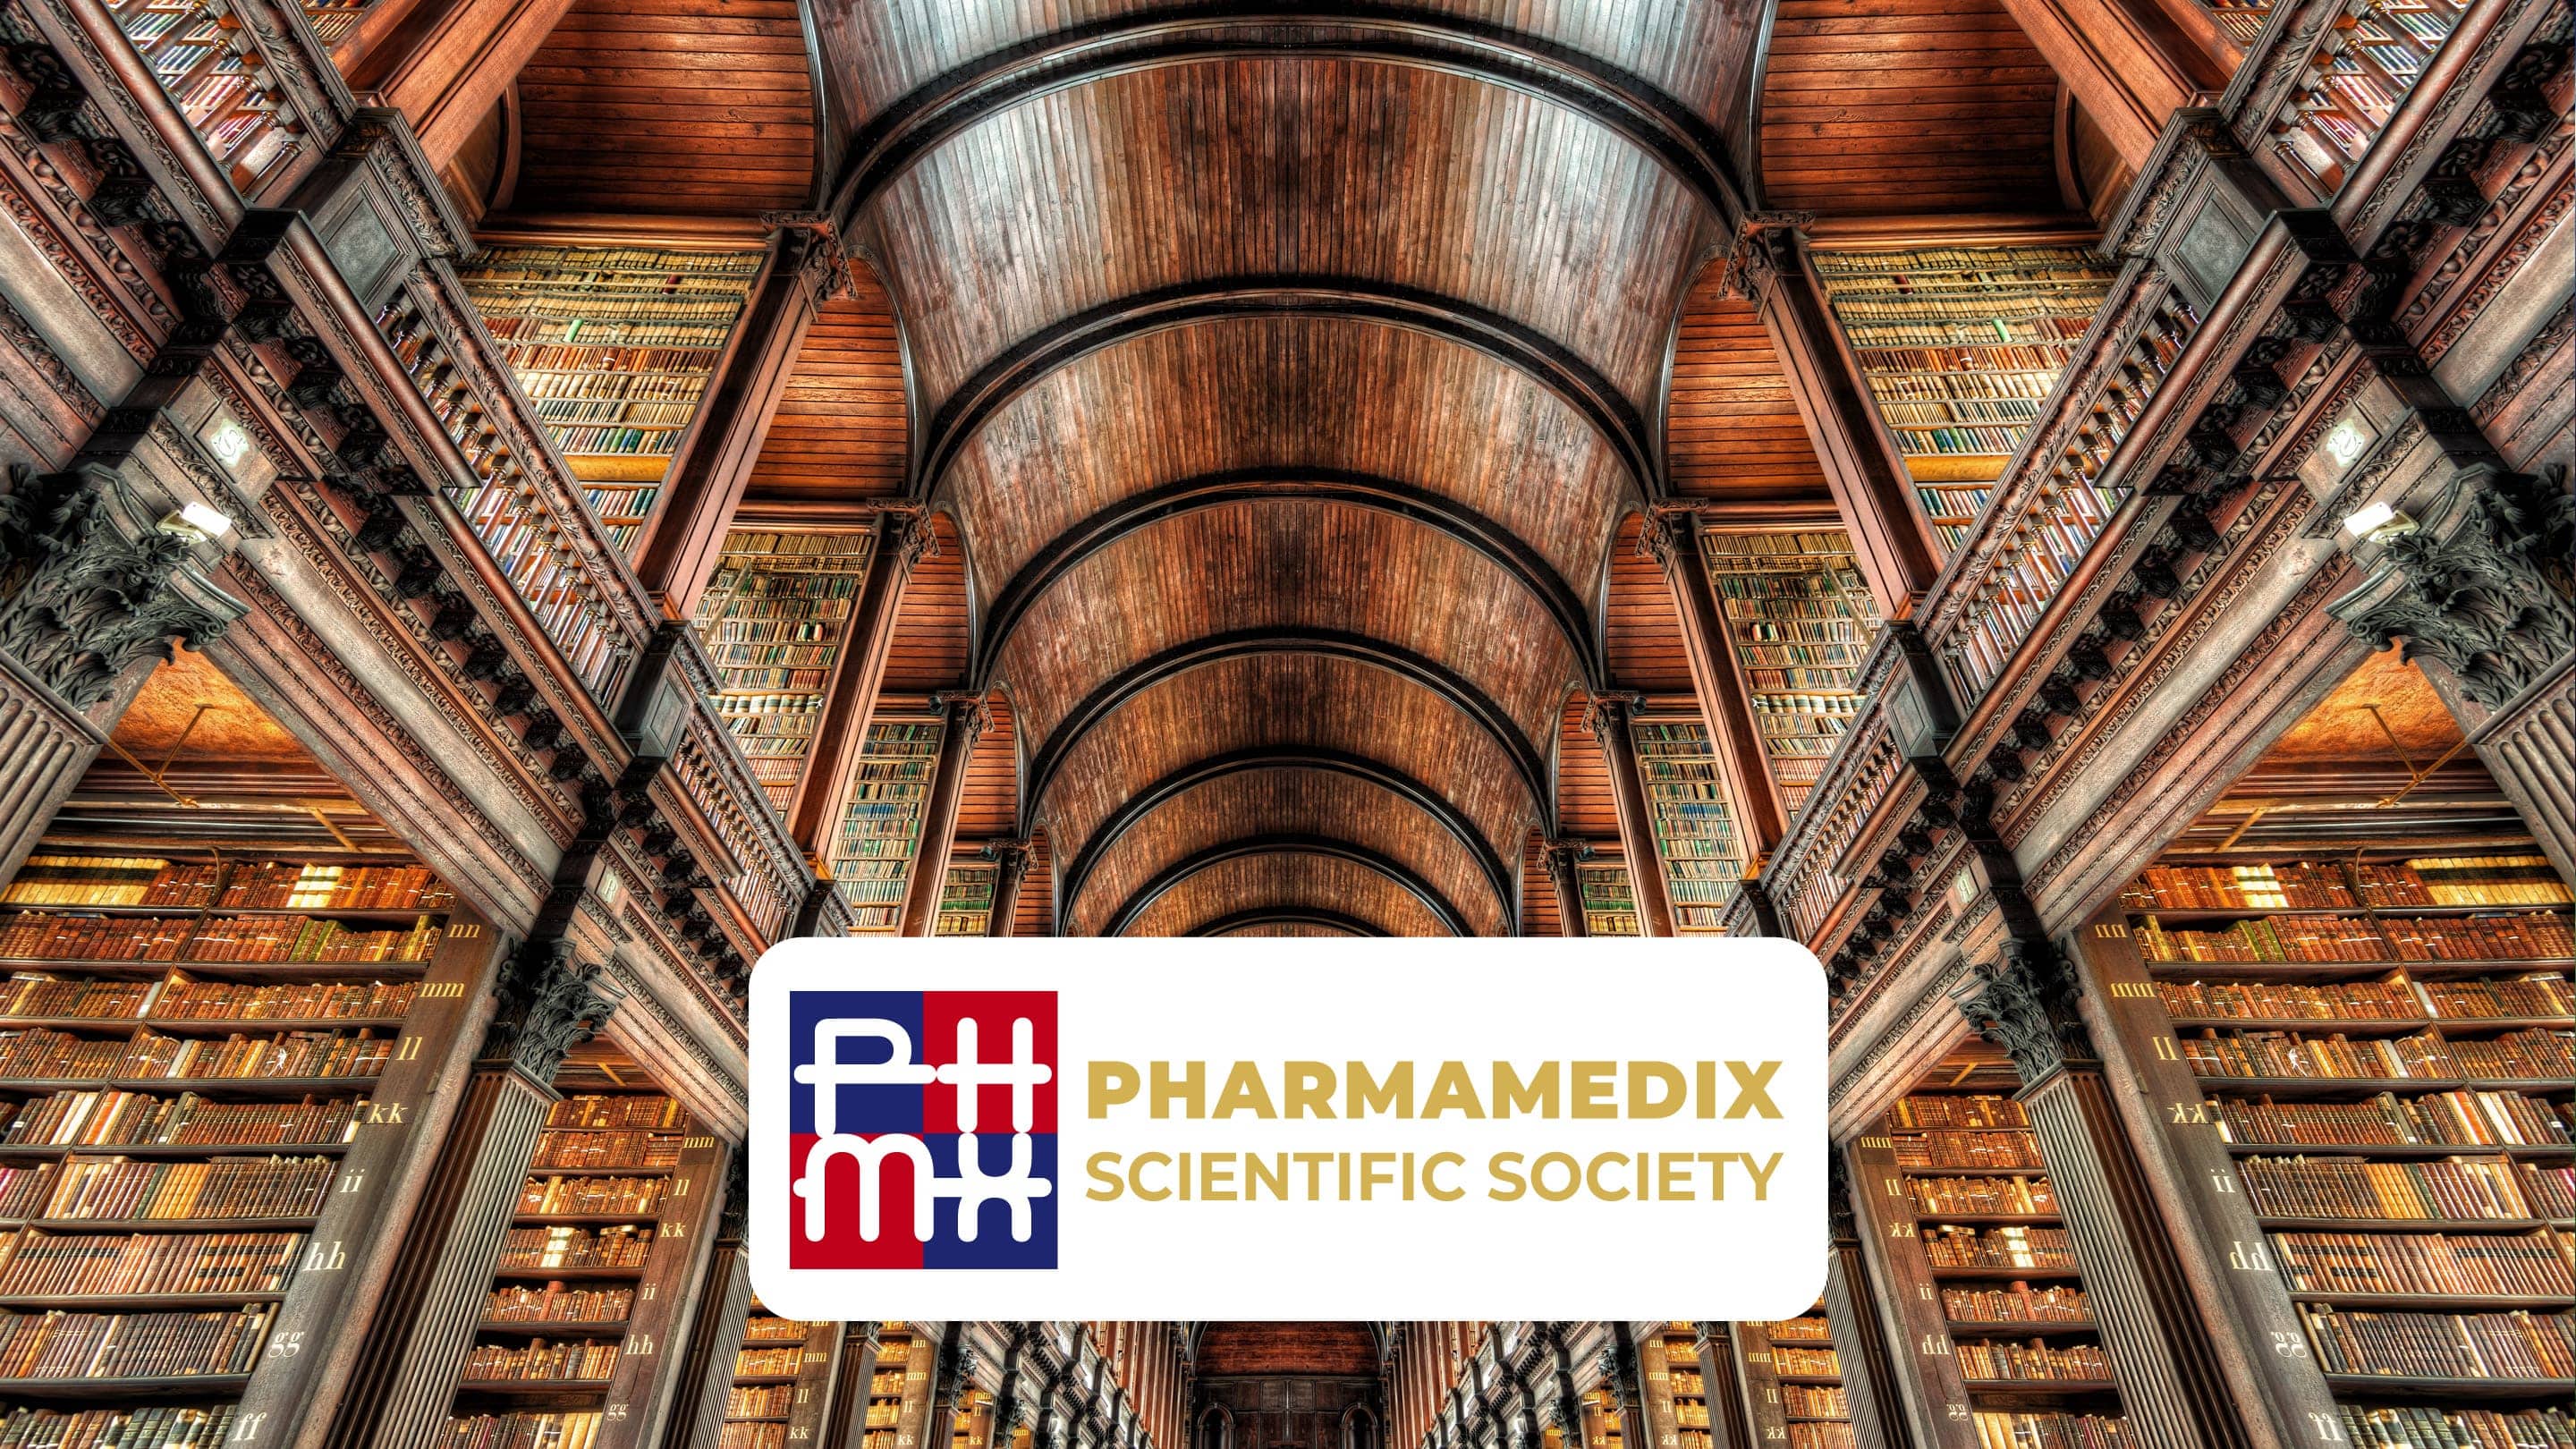 Pharmamedix Scientific Society